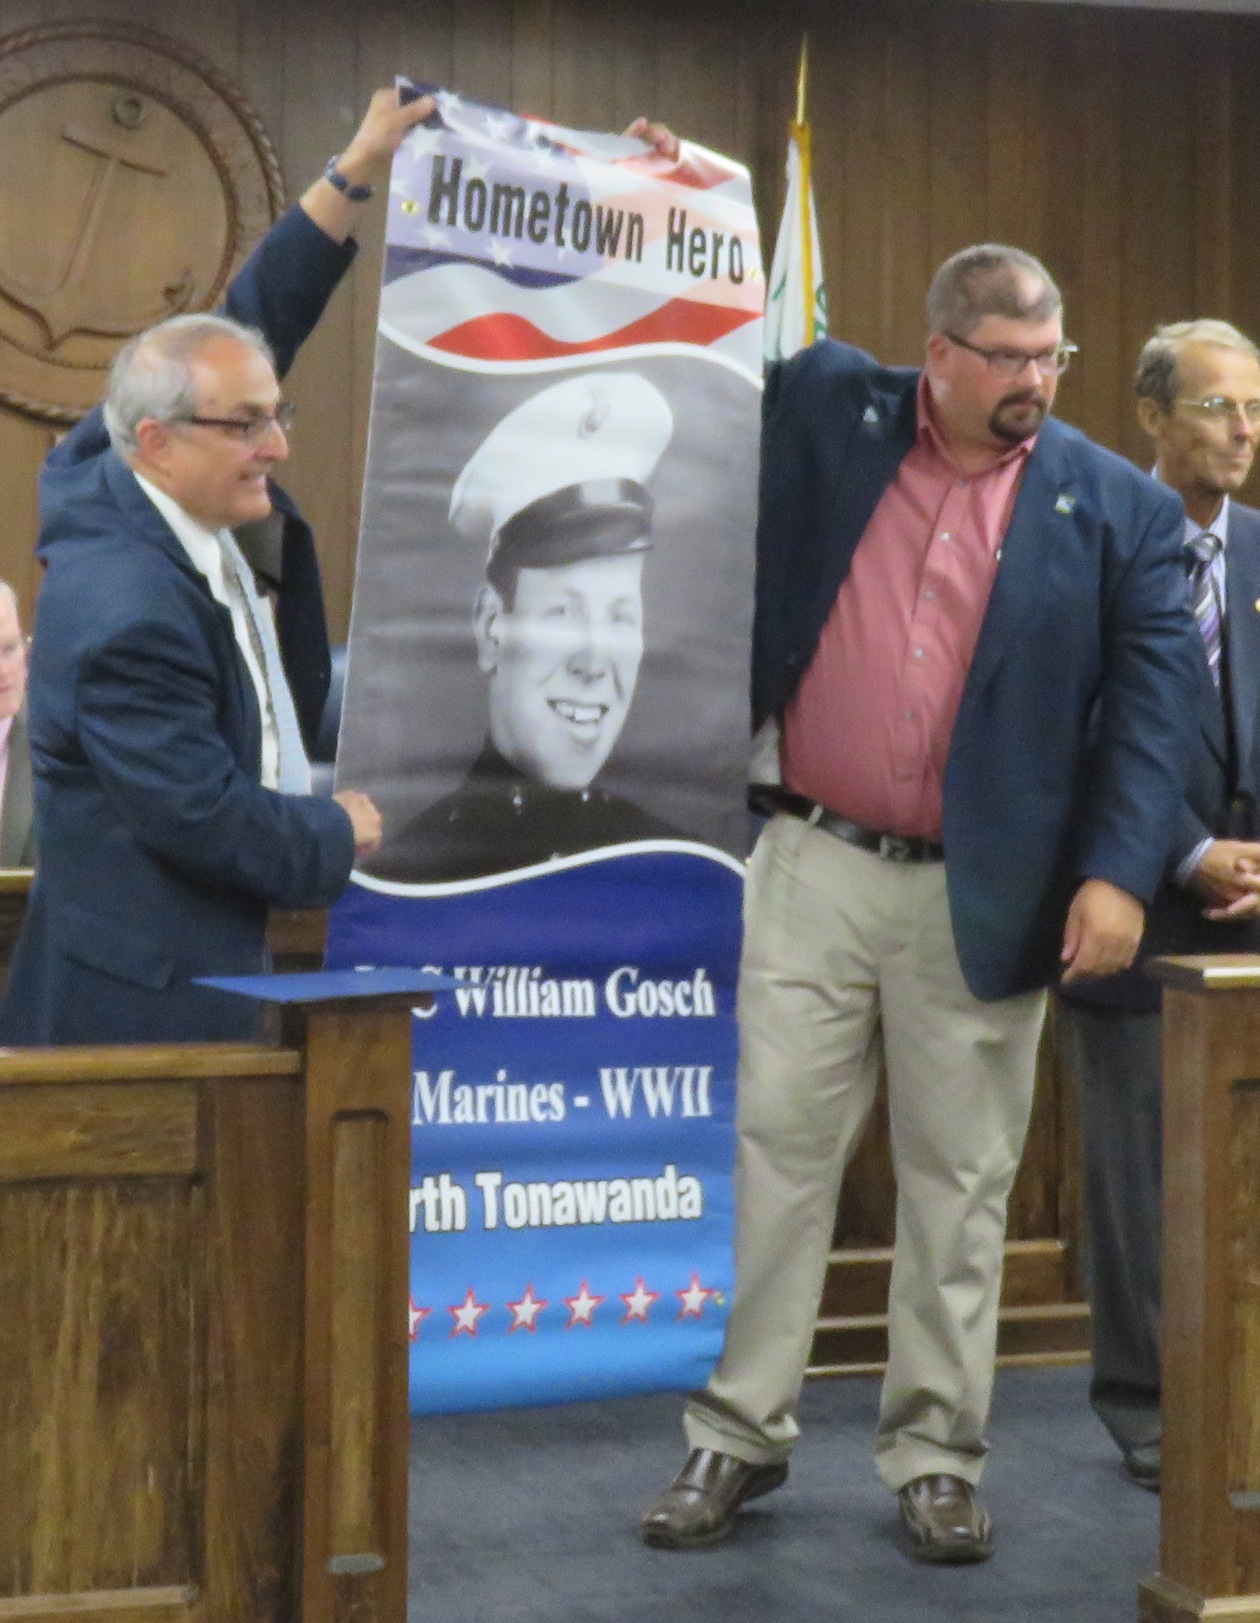 Mayor Arthur Pappas and Alderman Eric Zadzilka unveil veteran William Gosch's Hometown Hero banner. (All photos by David Yarger)